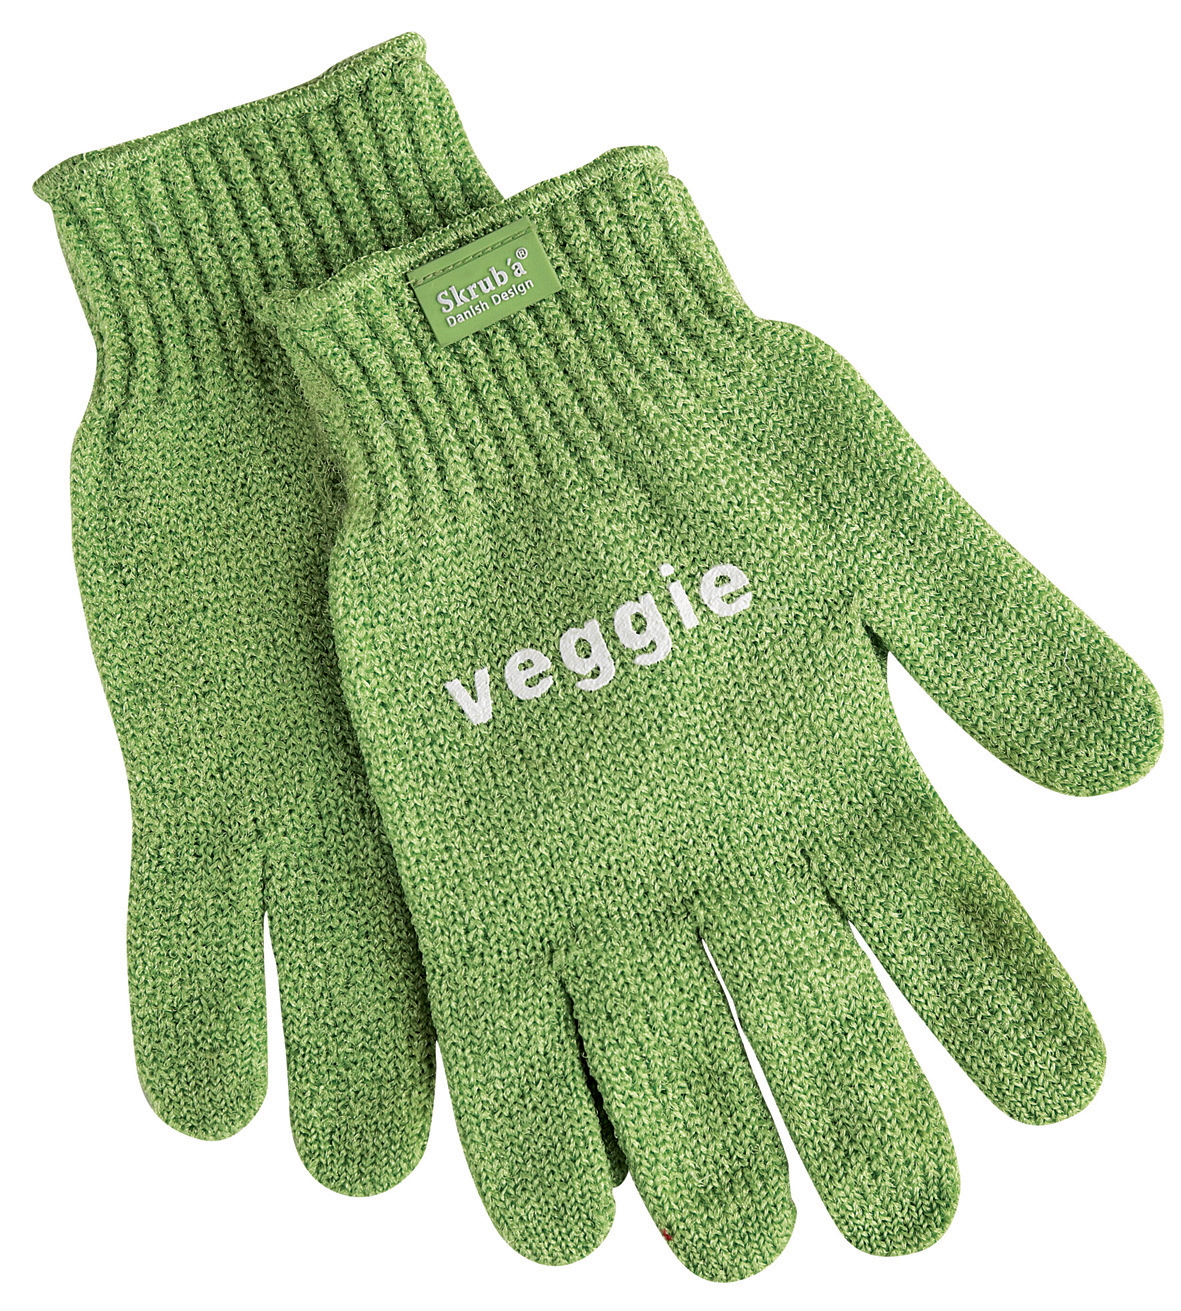 Fabrikators – Skrub’a Multi-Purpose Vegetable Scrubbing Pair of Gloves